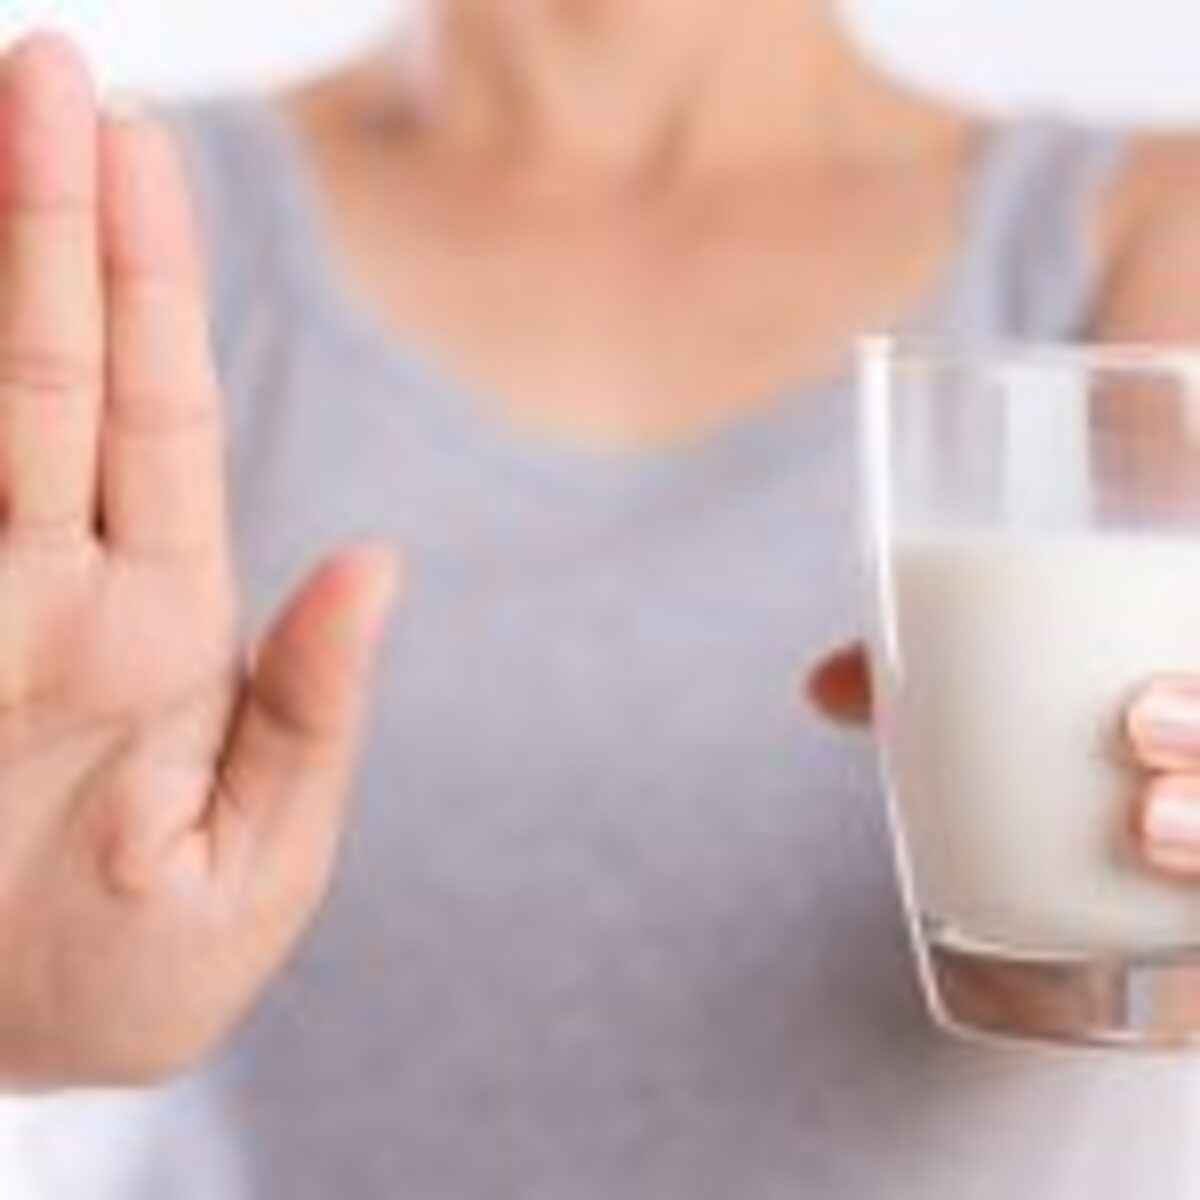 jefferson almeida intolerancia lactose